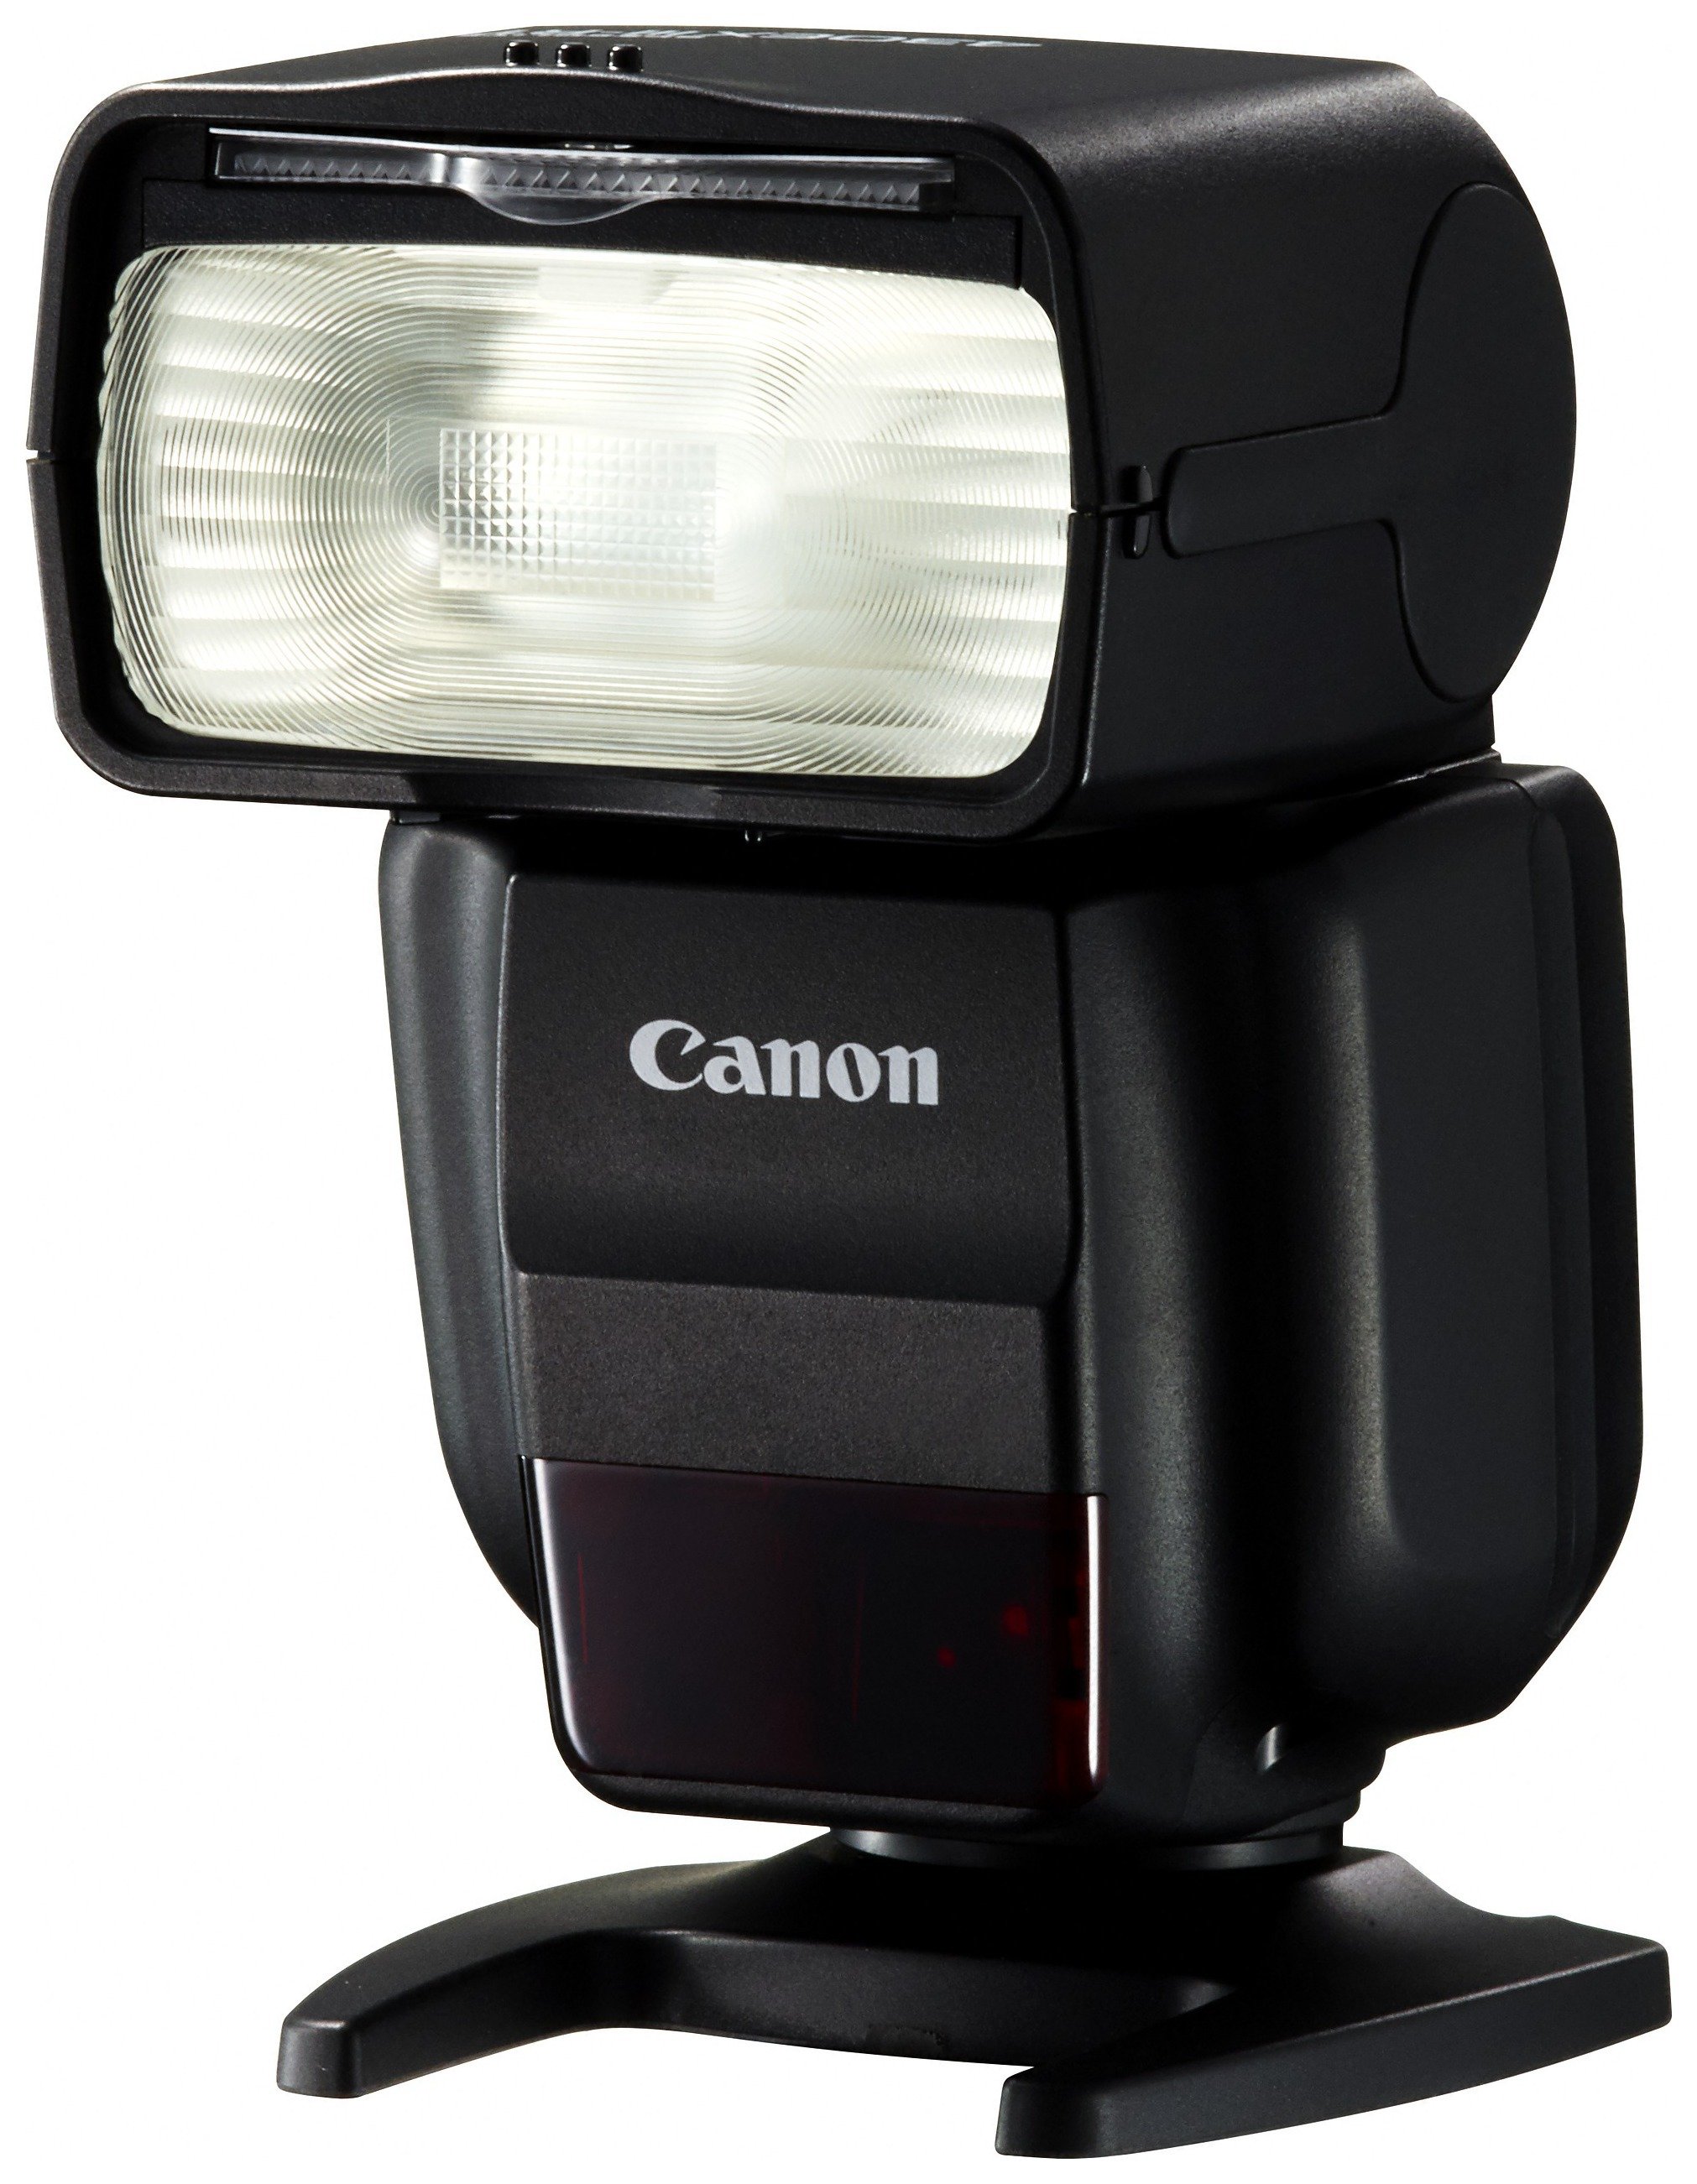 Canon 430EX DSLR Speedlight Flash. Review